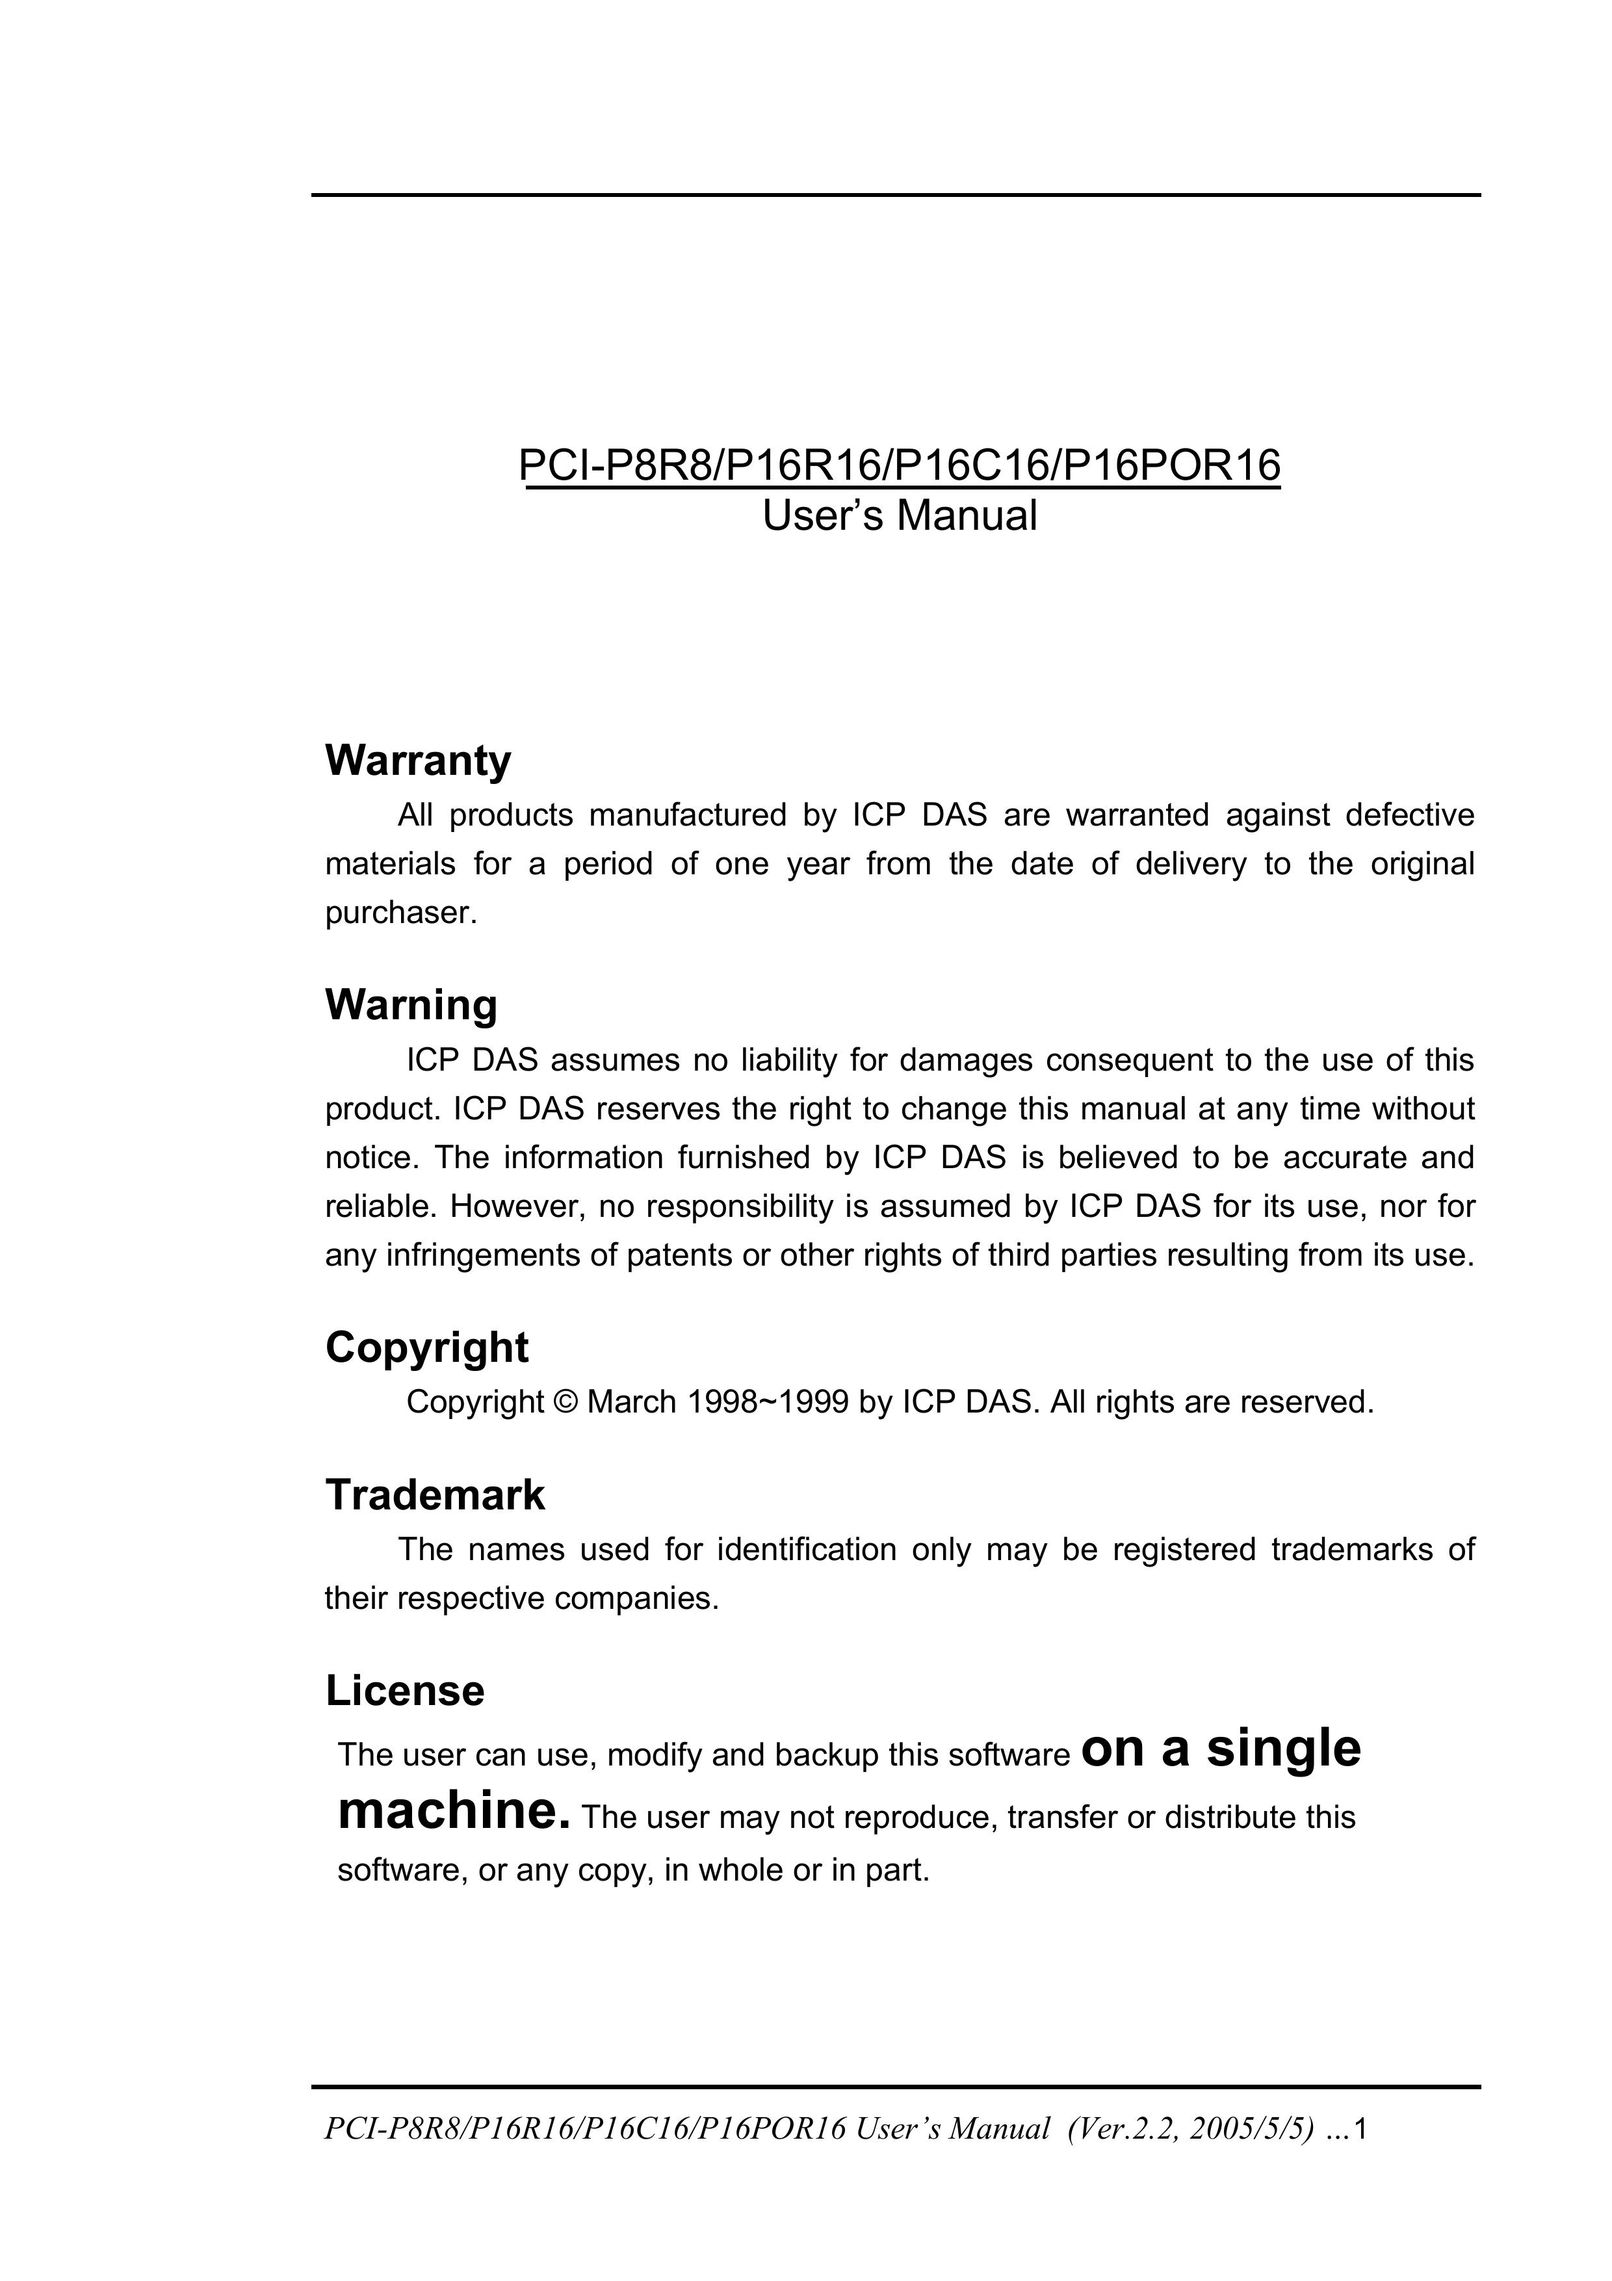 ICP DAS USA PCI-P8R8 Computer Hardware User Manual